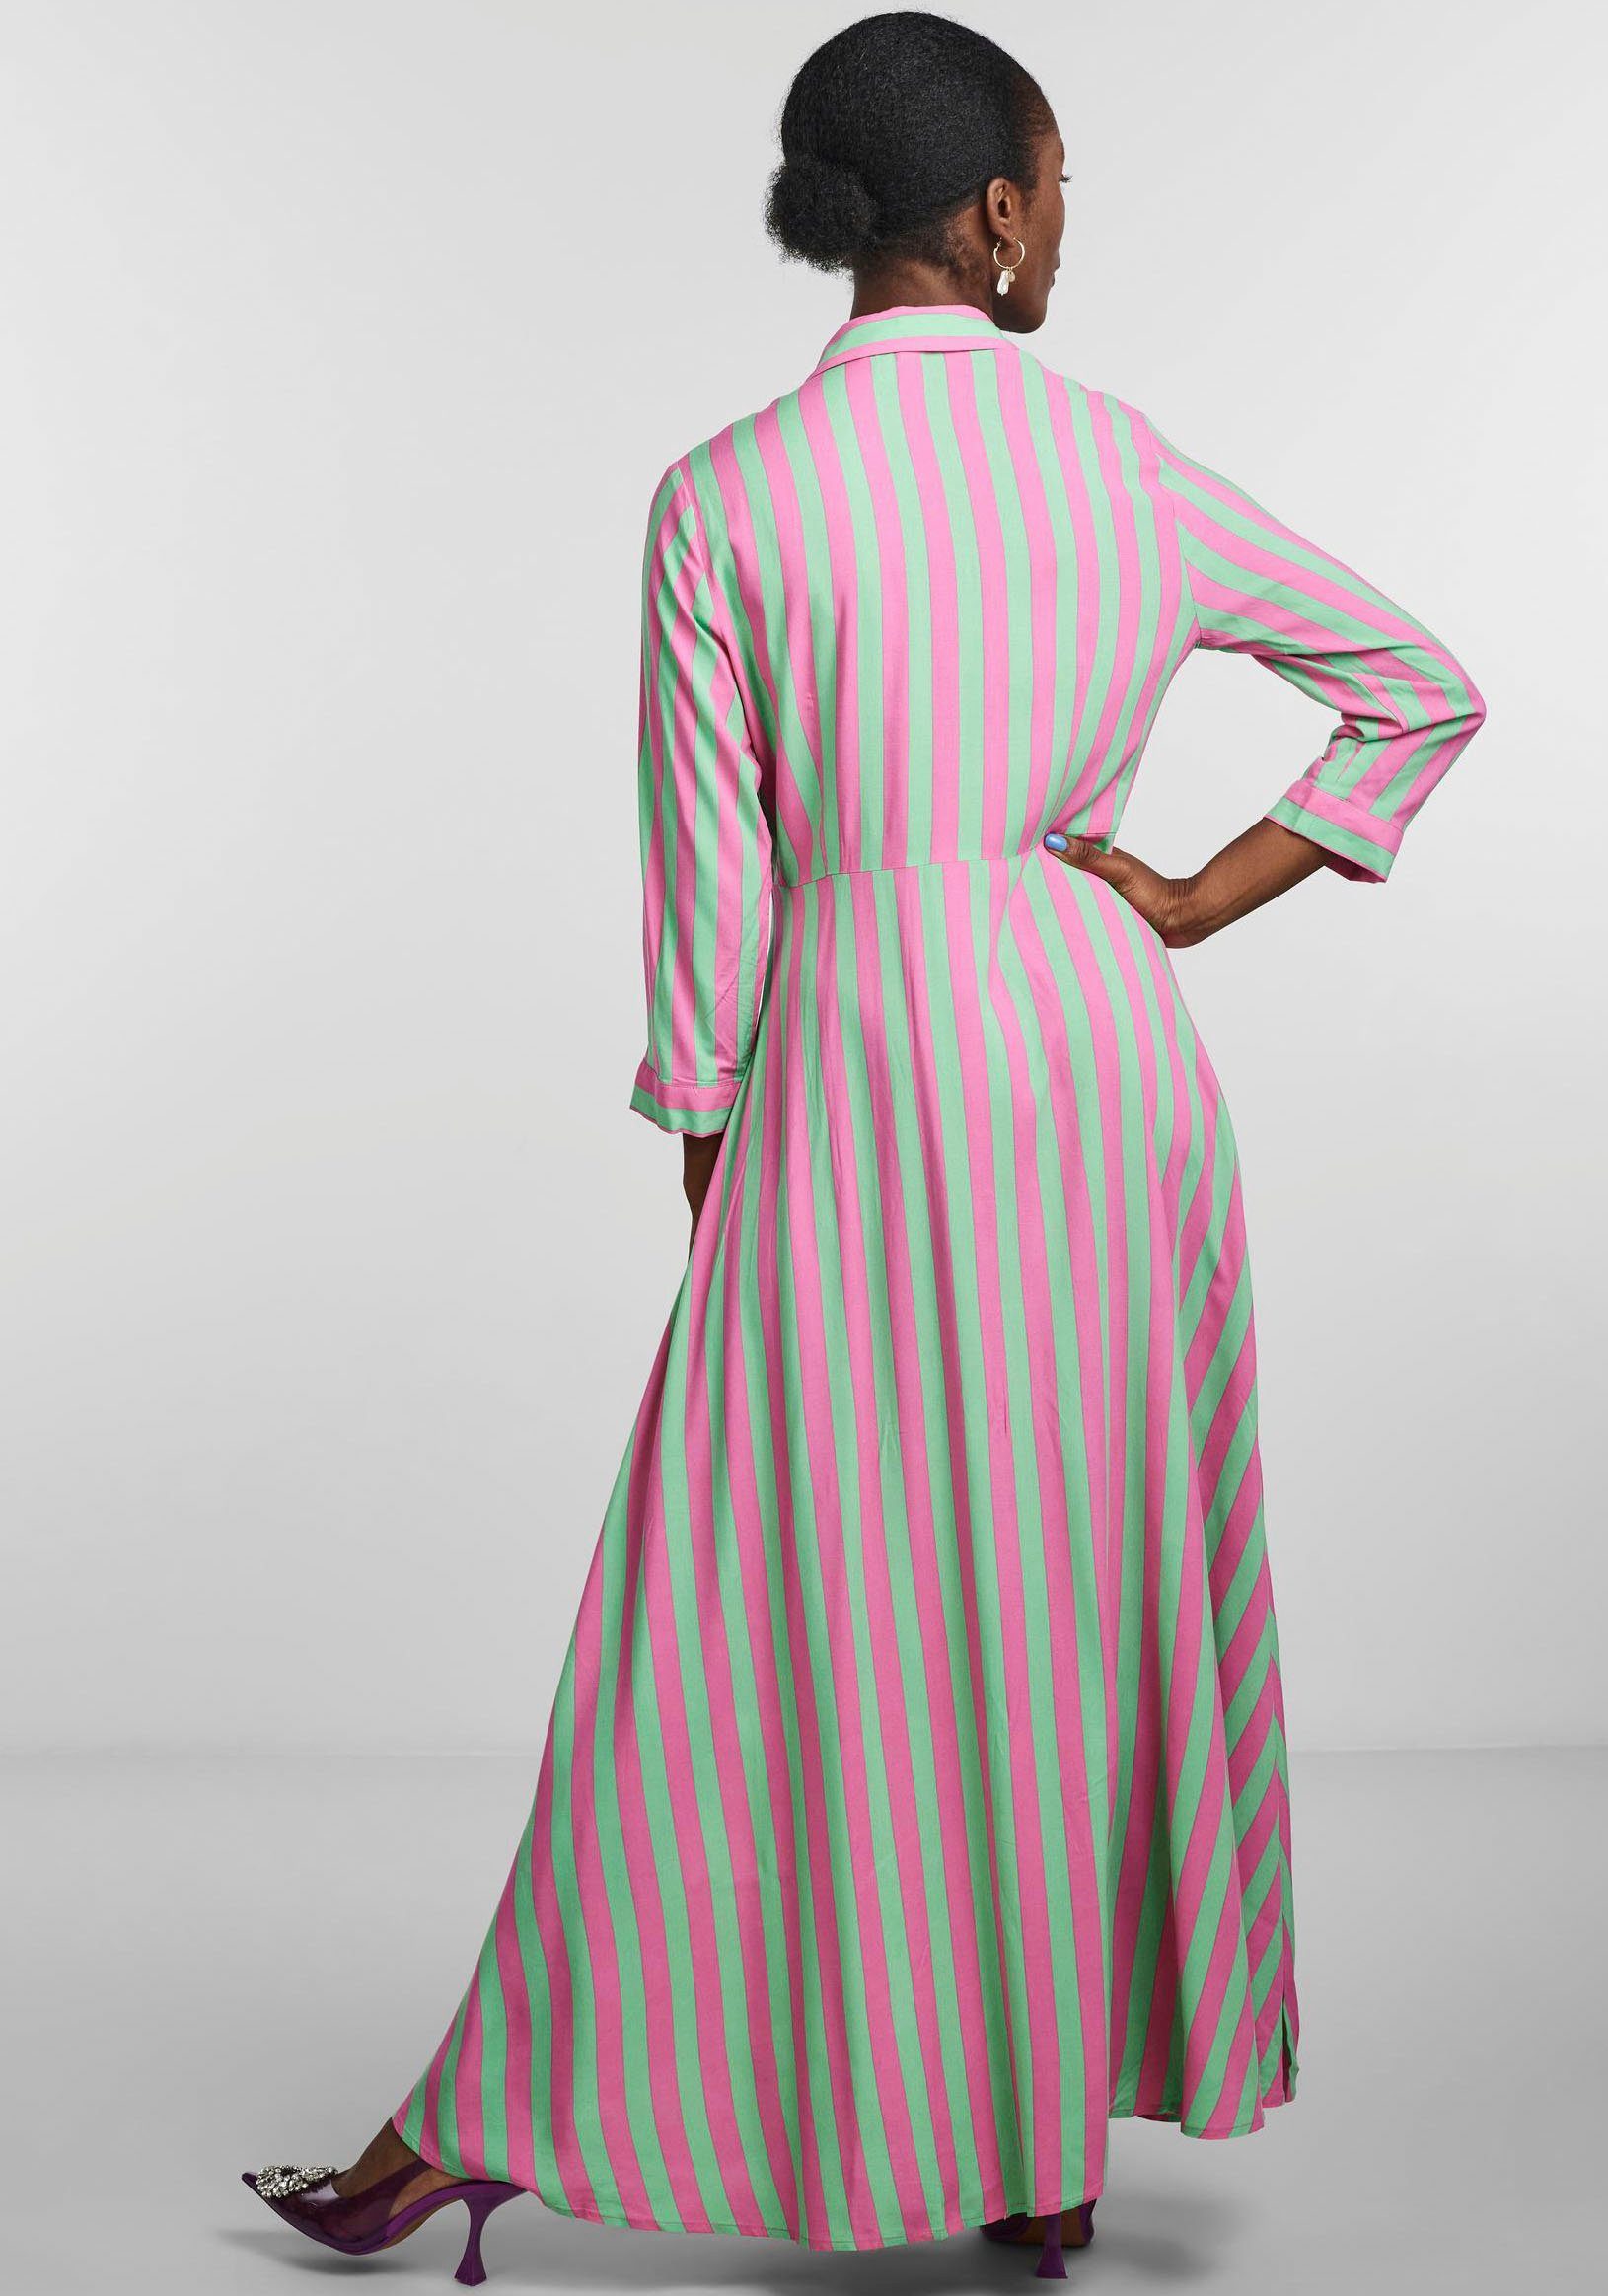 Ärmel YASSAVANNA DRESS SHIRT LONG Hemdblusenkleid PINK 3/4 Katydid mit Str:AZELIA Y.A.S